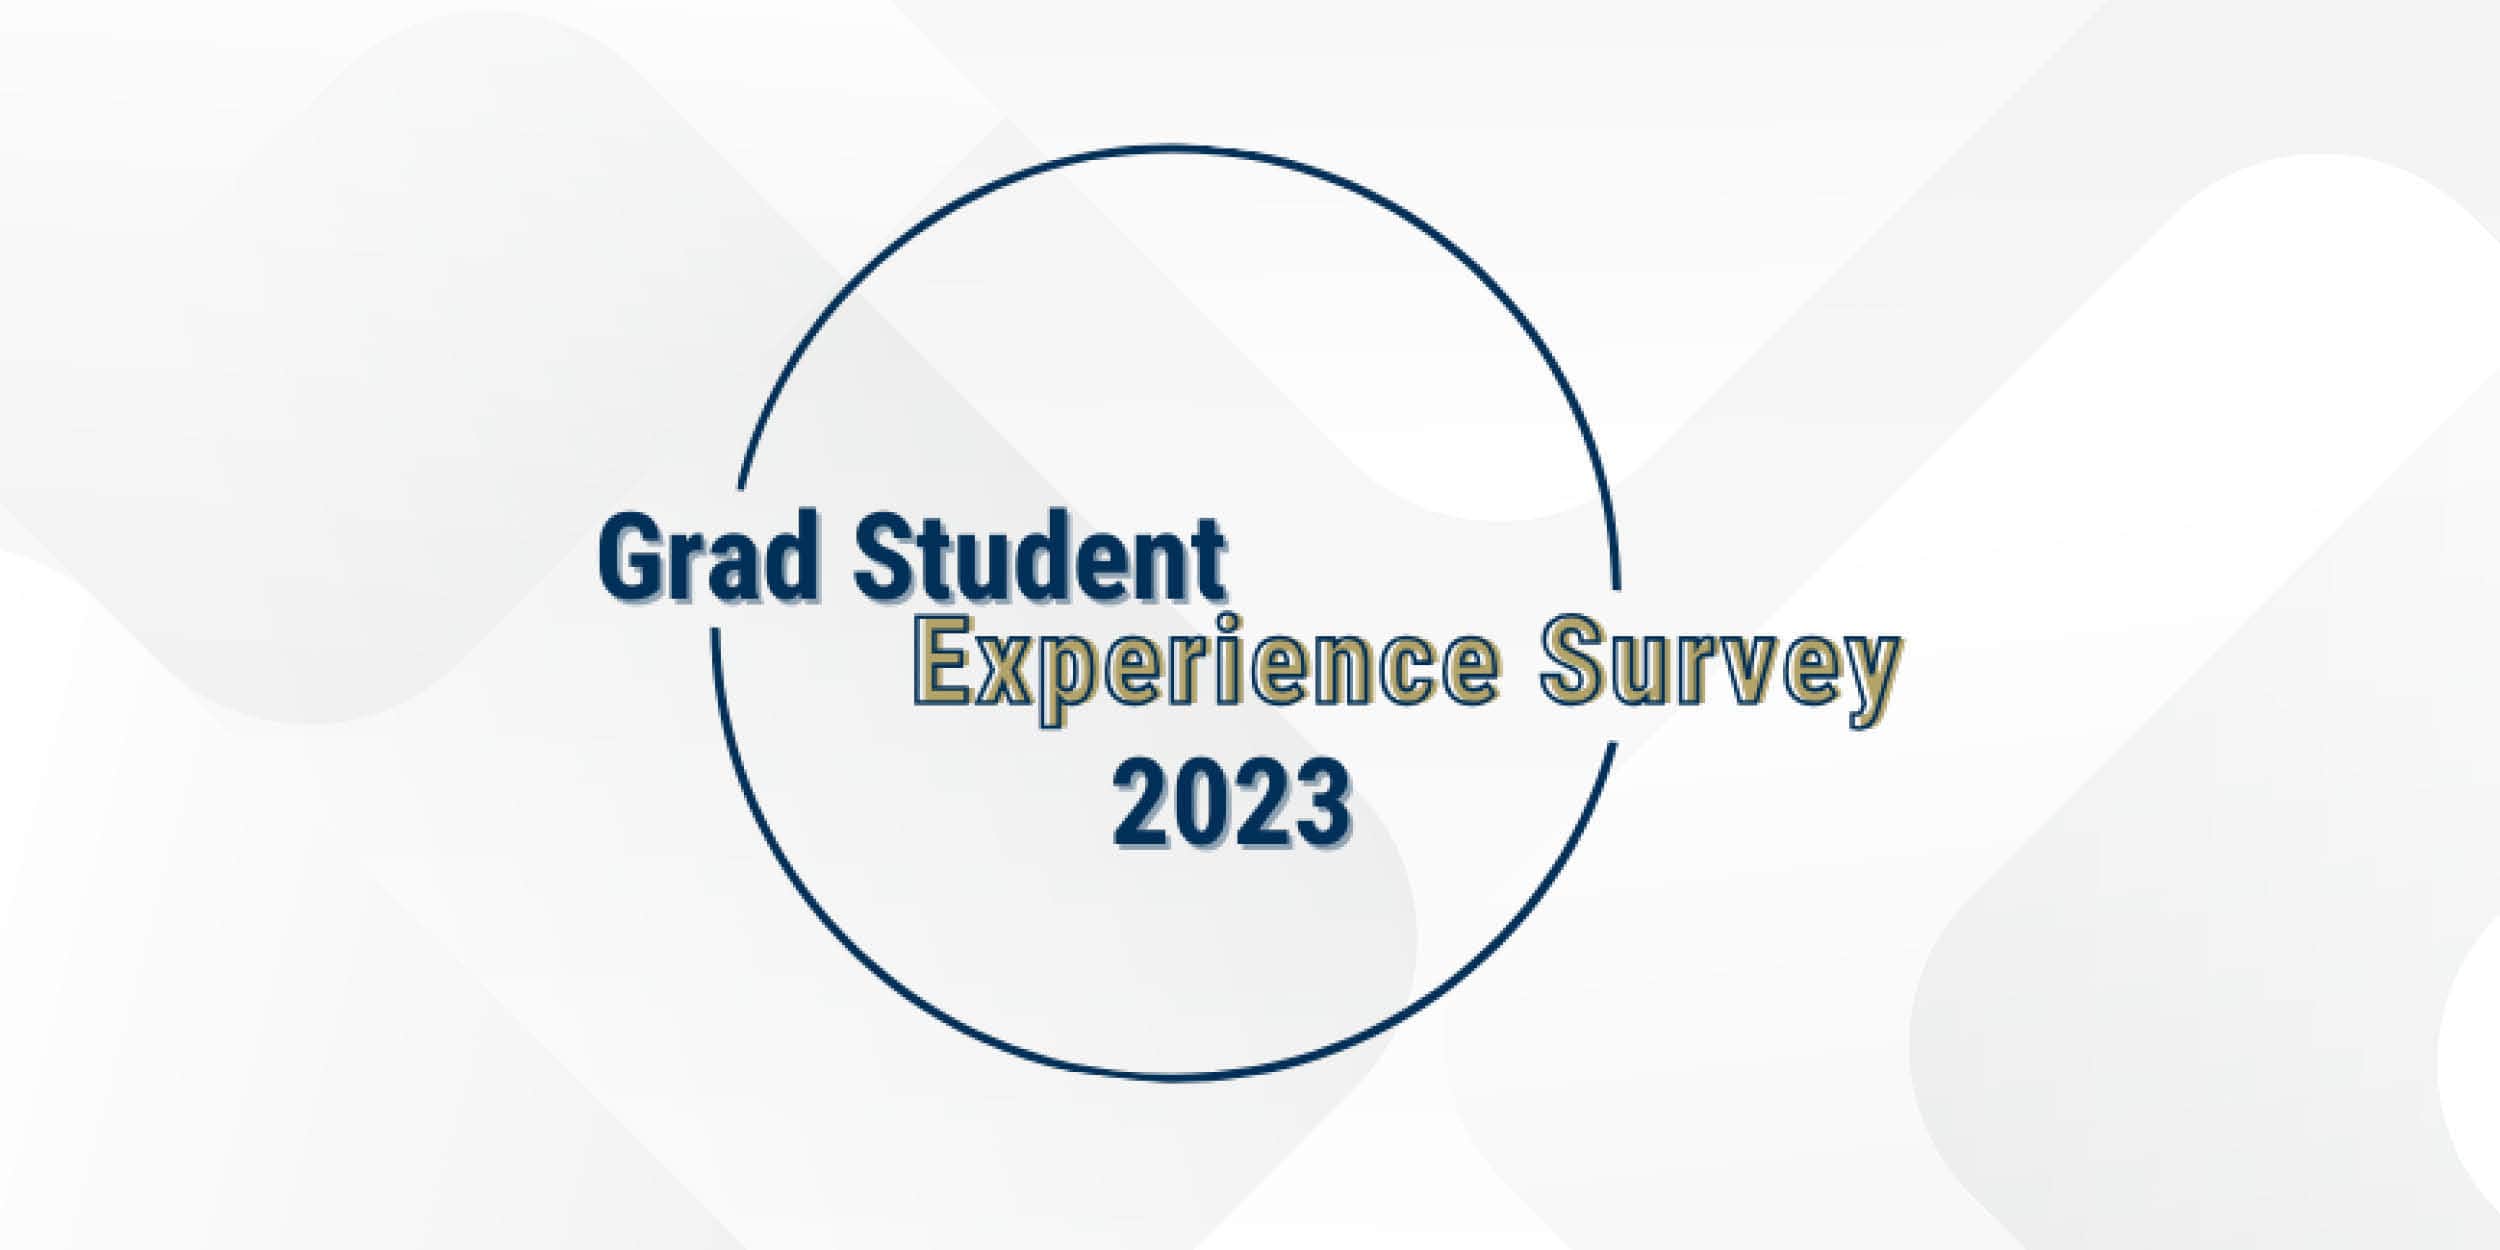 Grad Student Experience Survey 2023 logo